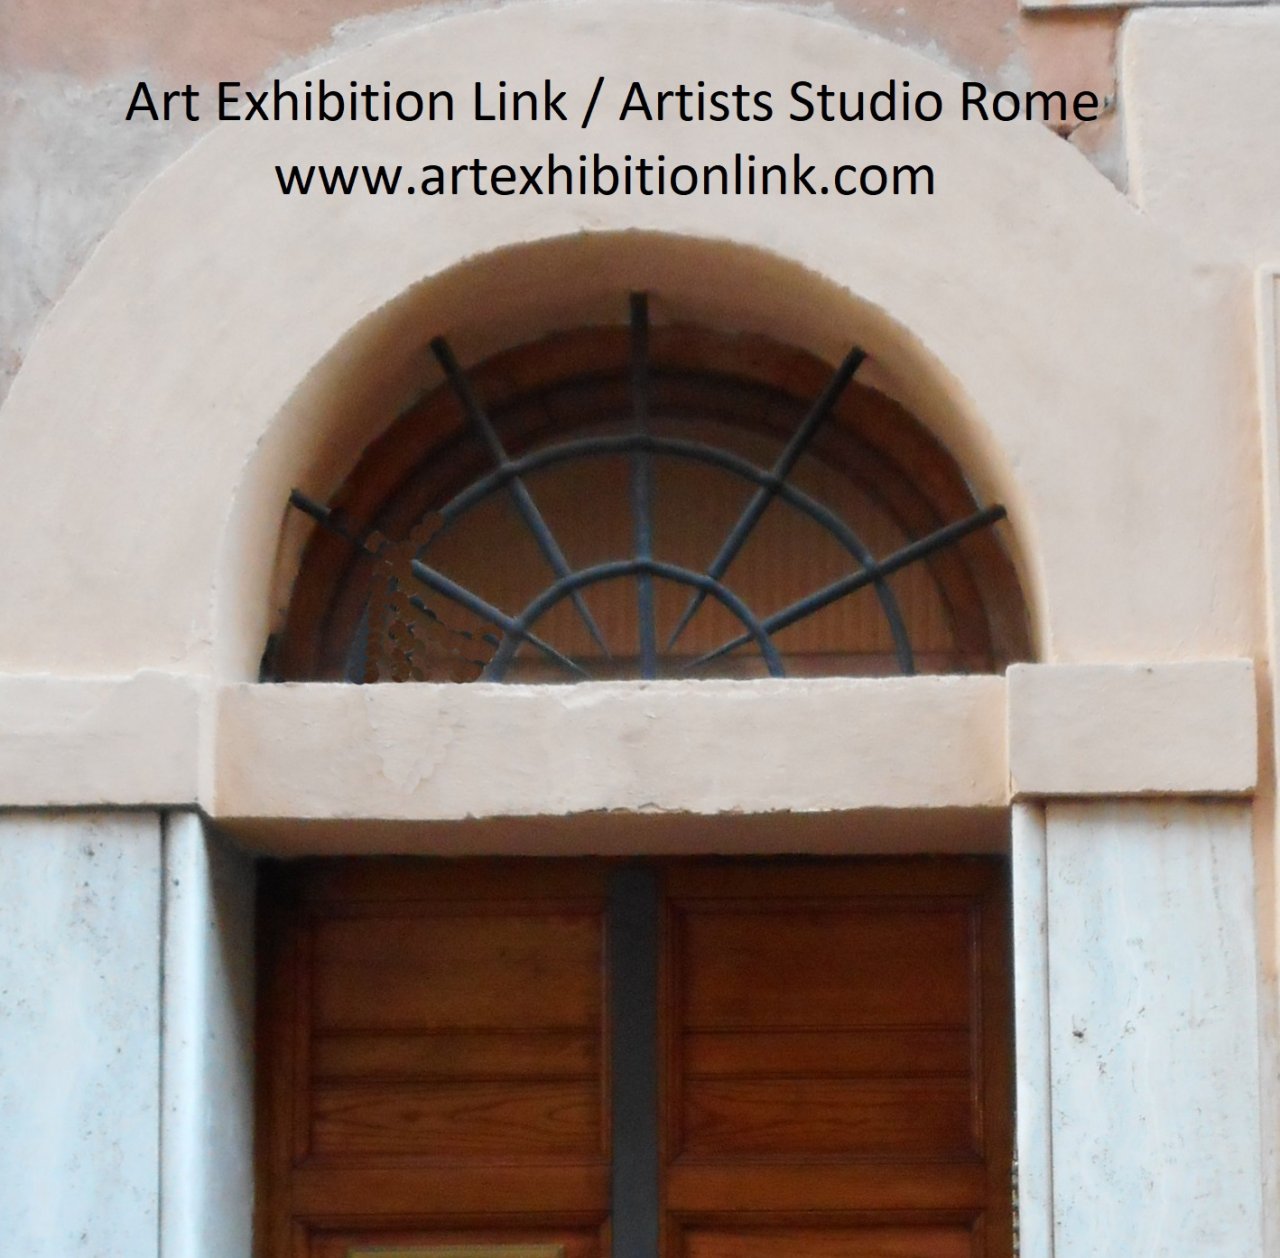 Art Exhibition Link / Artists Studio Rome